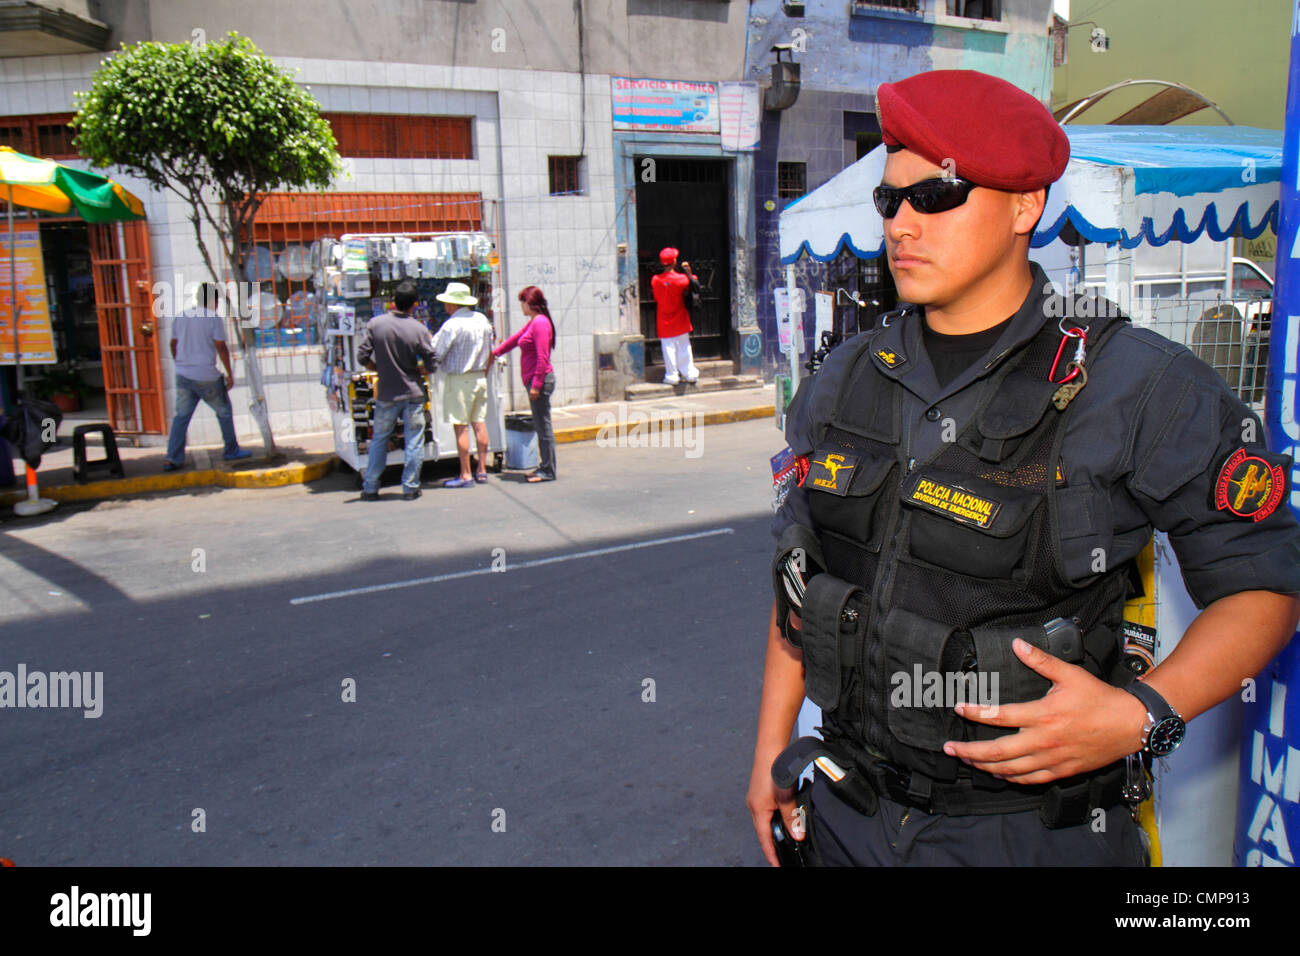 Lima Peru, Surquillo, Mercado de Surquillo, Straßenszene, Geschäftsviertel, Hispanic ethnische Nationalgarde, Policia Nacional, bewaffneter Polizist, Uniform, bere Stockfoto